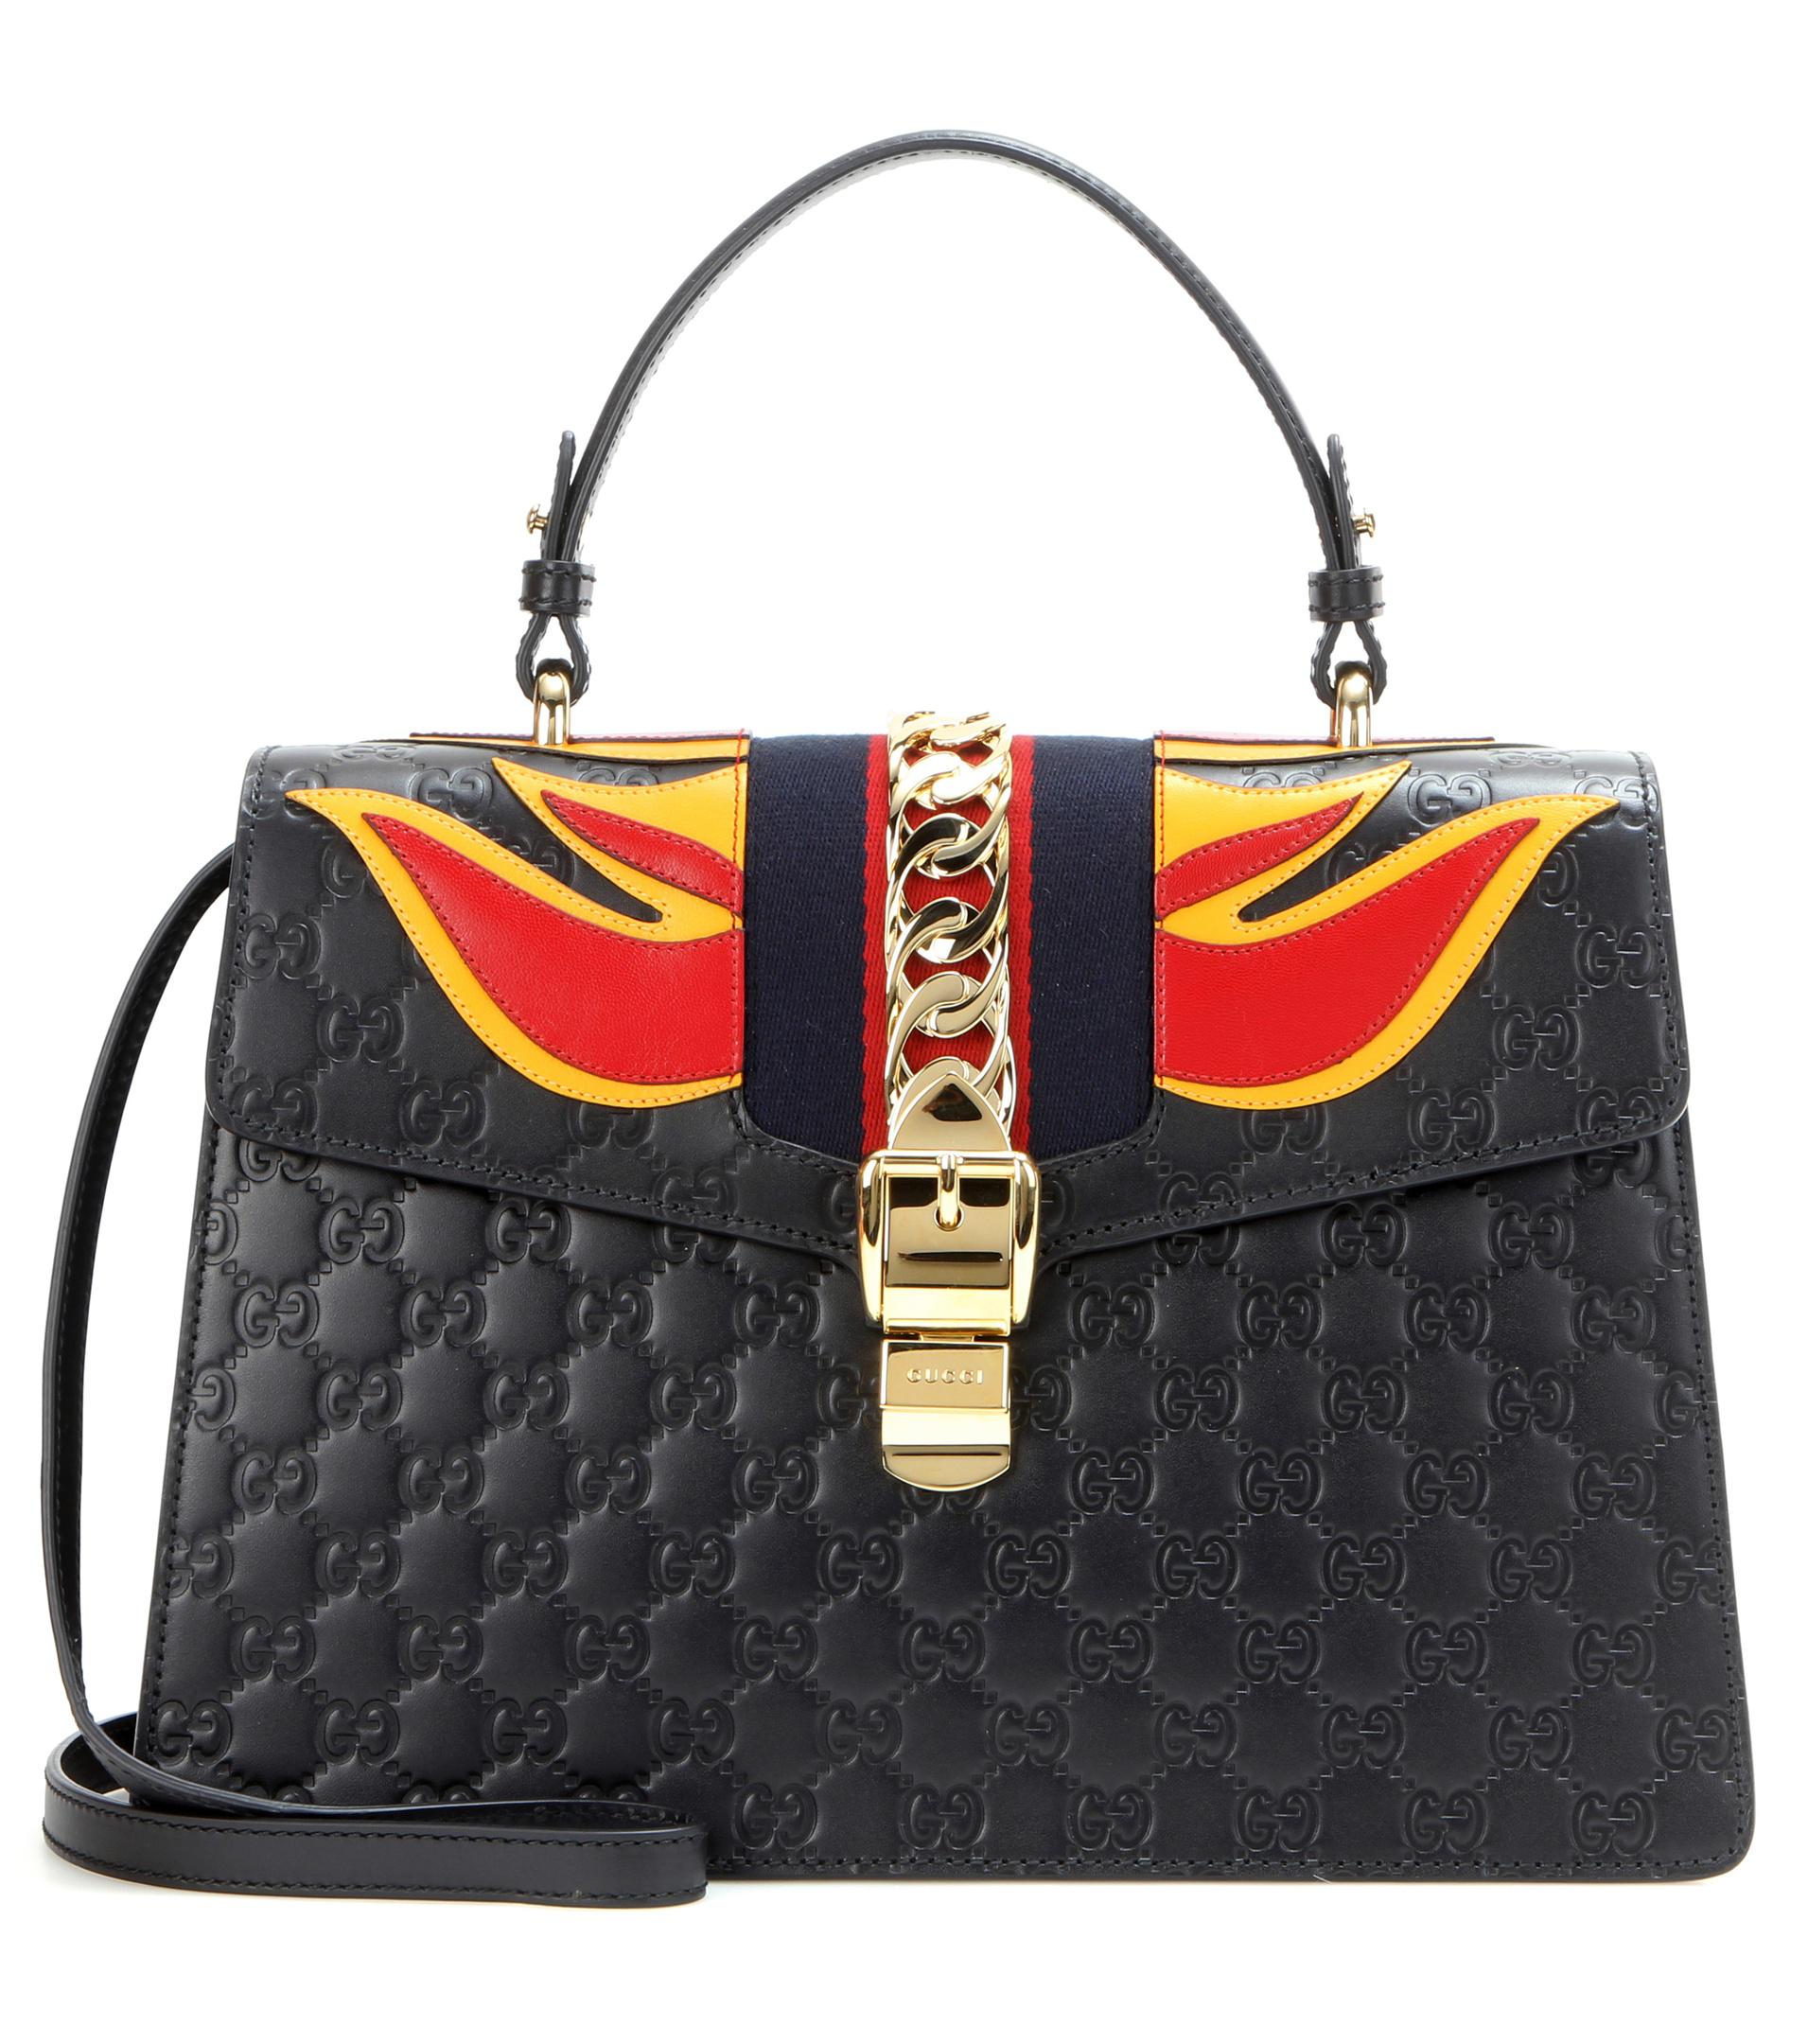 Gucci Signature Sylvie Embossed Leather Shoulder Bag in Black - Lyst